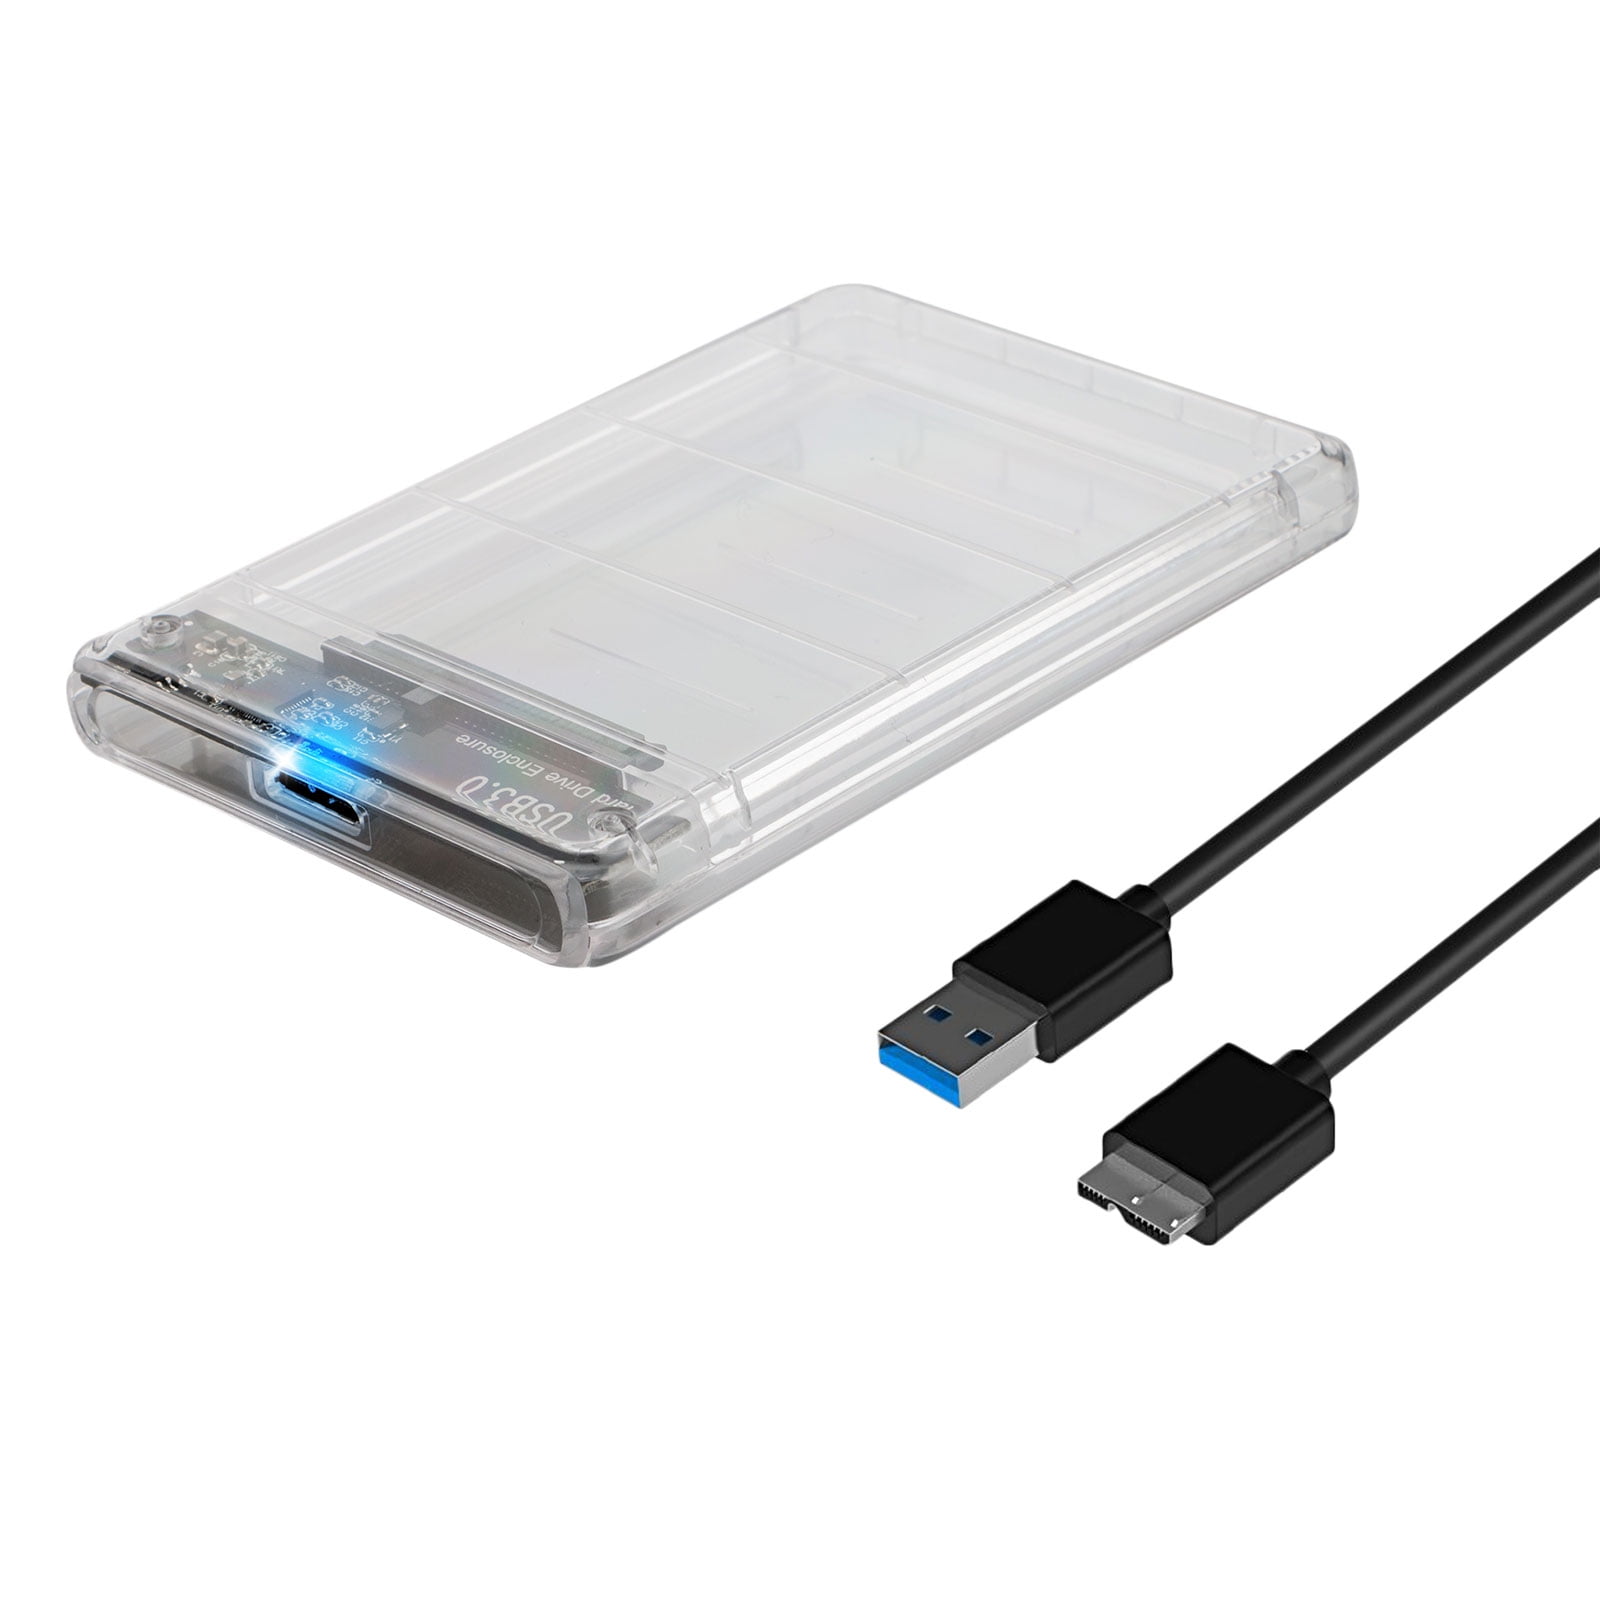 3.5"Inch SATA HDD Enclosure External USB3.0 HDD Cover Case